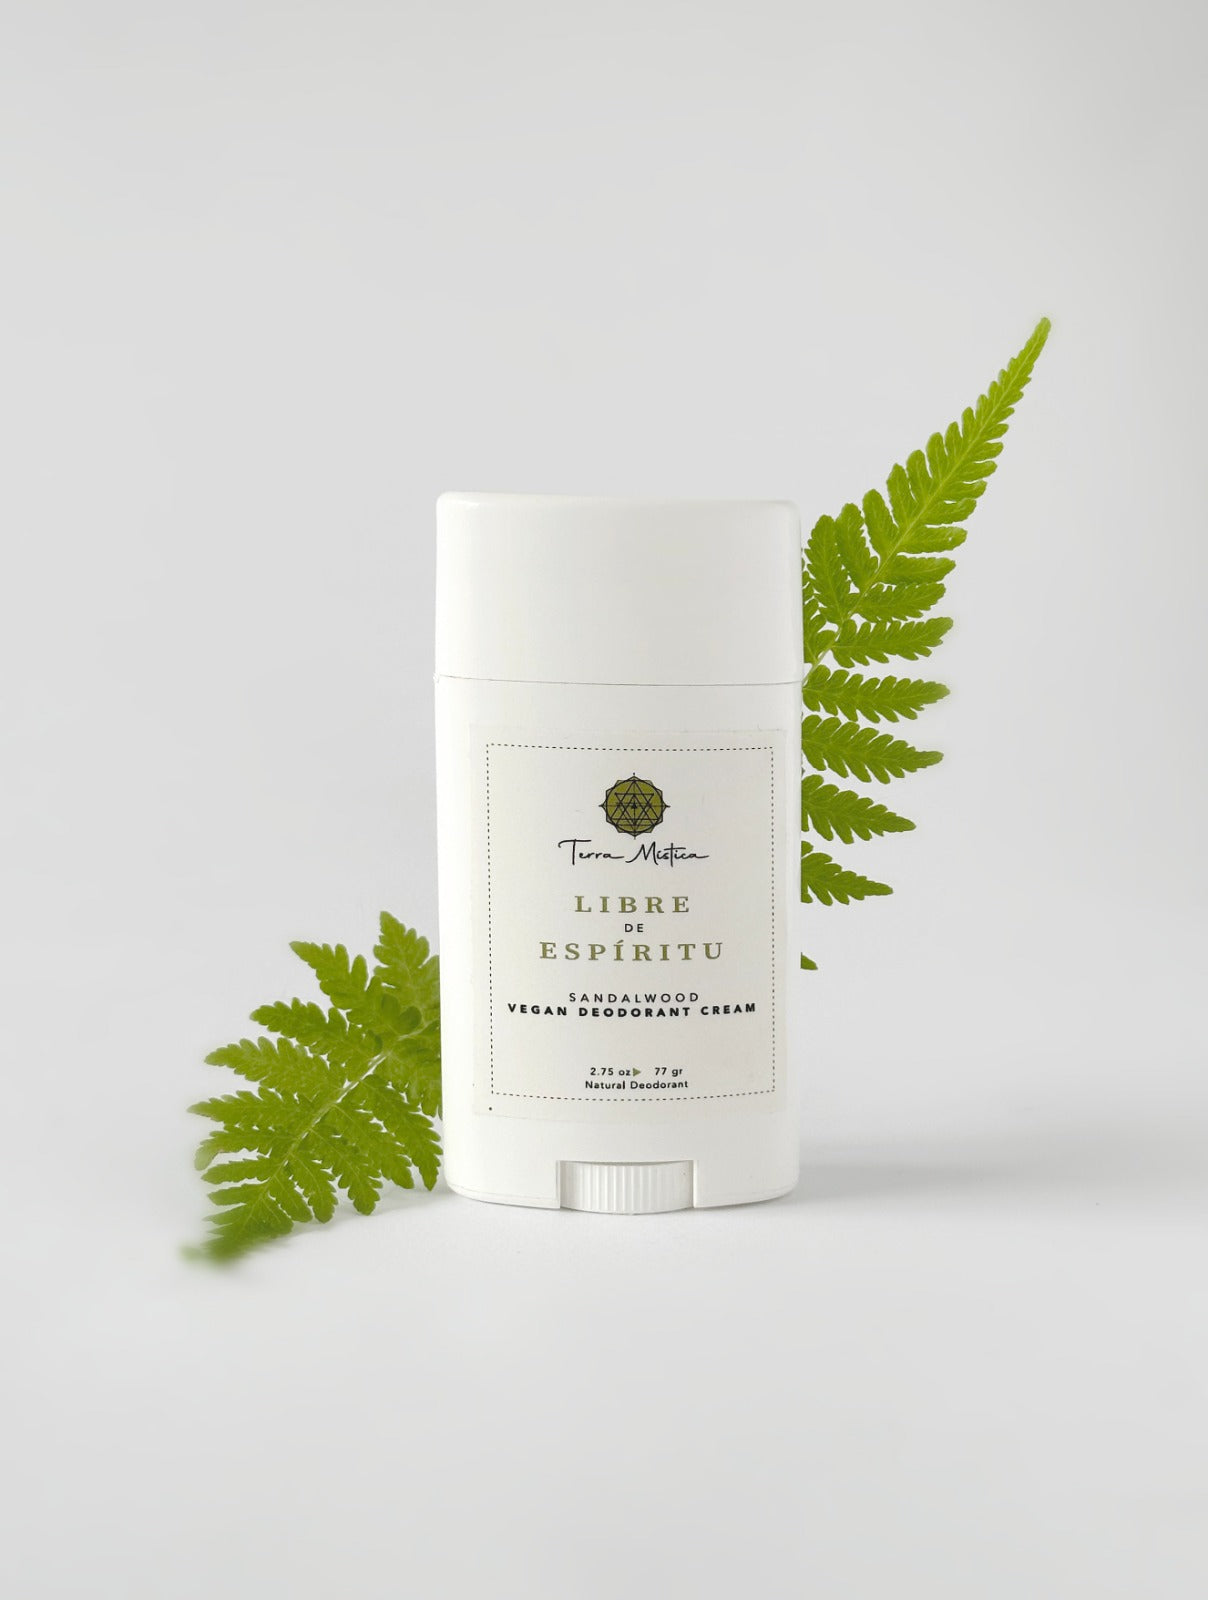 Desodorante Natural / Natural Deodorant Sandalwood - Lavander & Vanilla